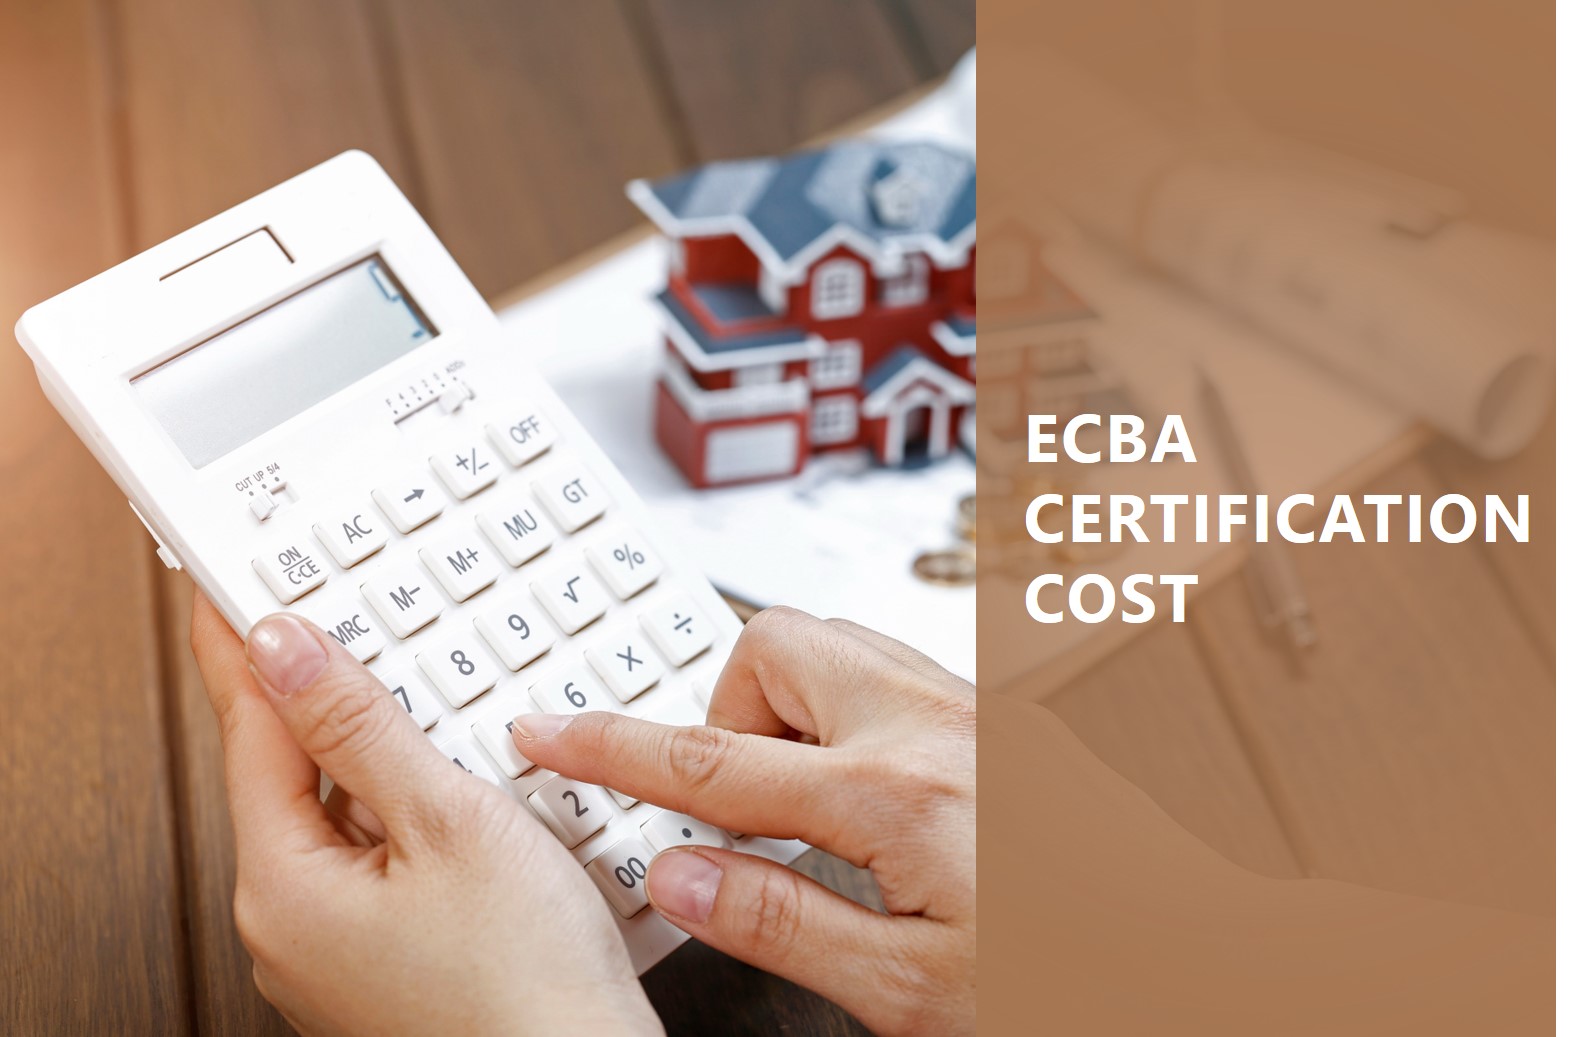 ECBA Certification Cost   ECBA Certification Cost Details ...